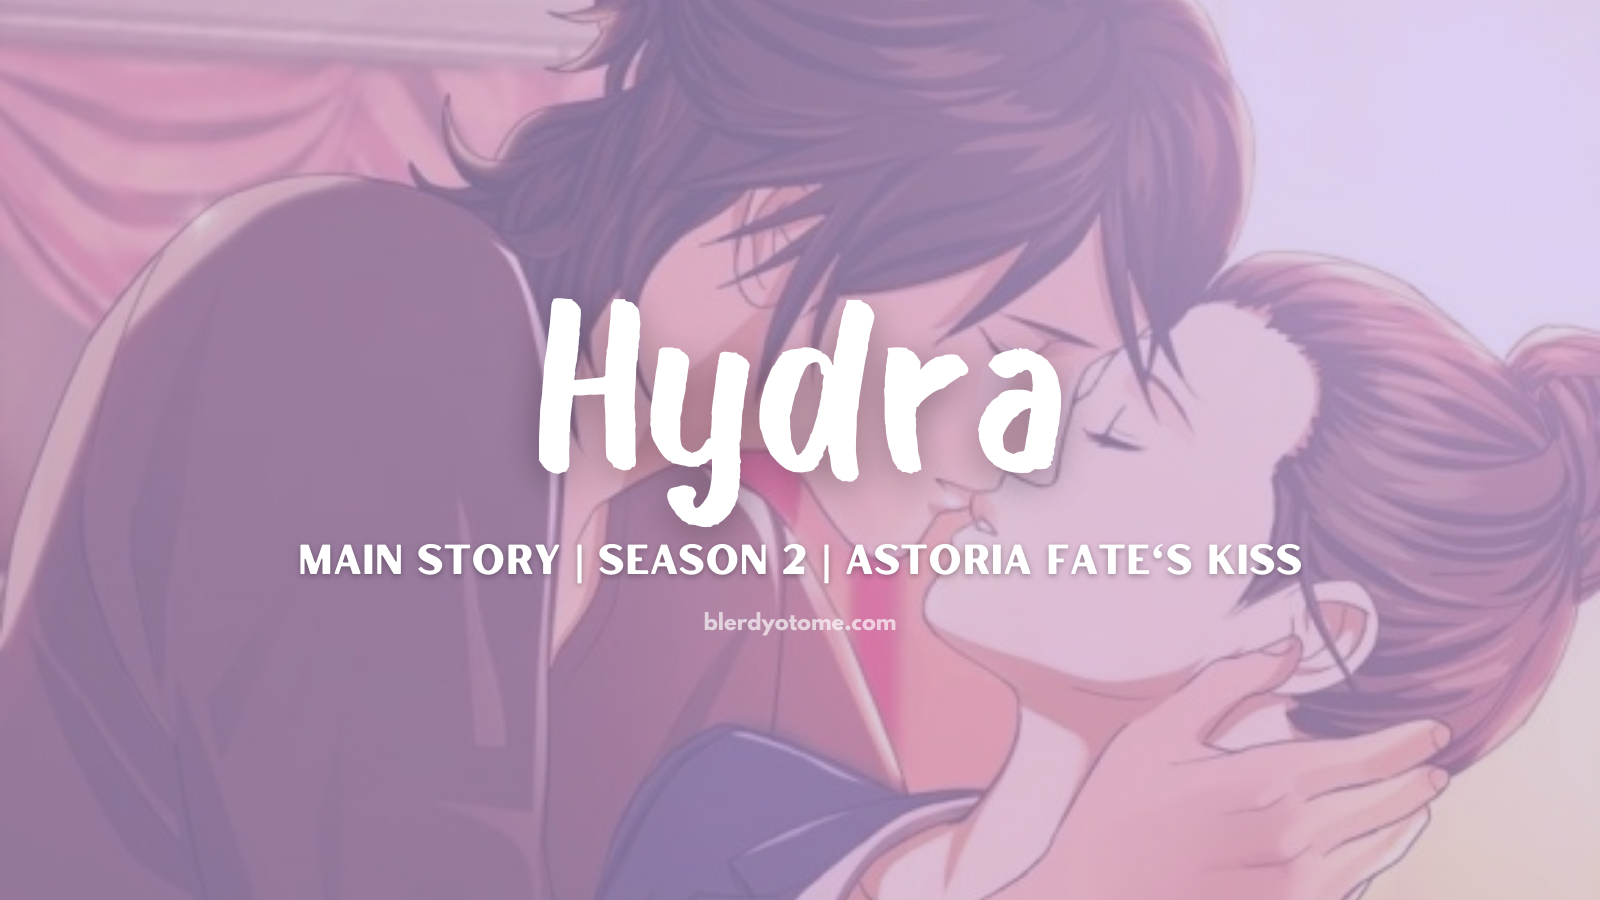 Astoria Fates Kiss Hydra Season 2